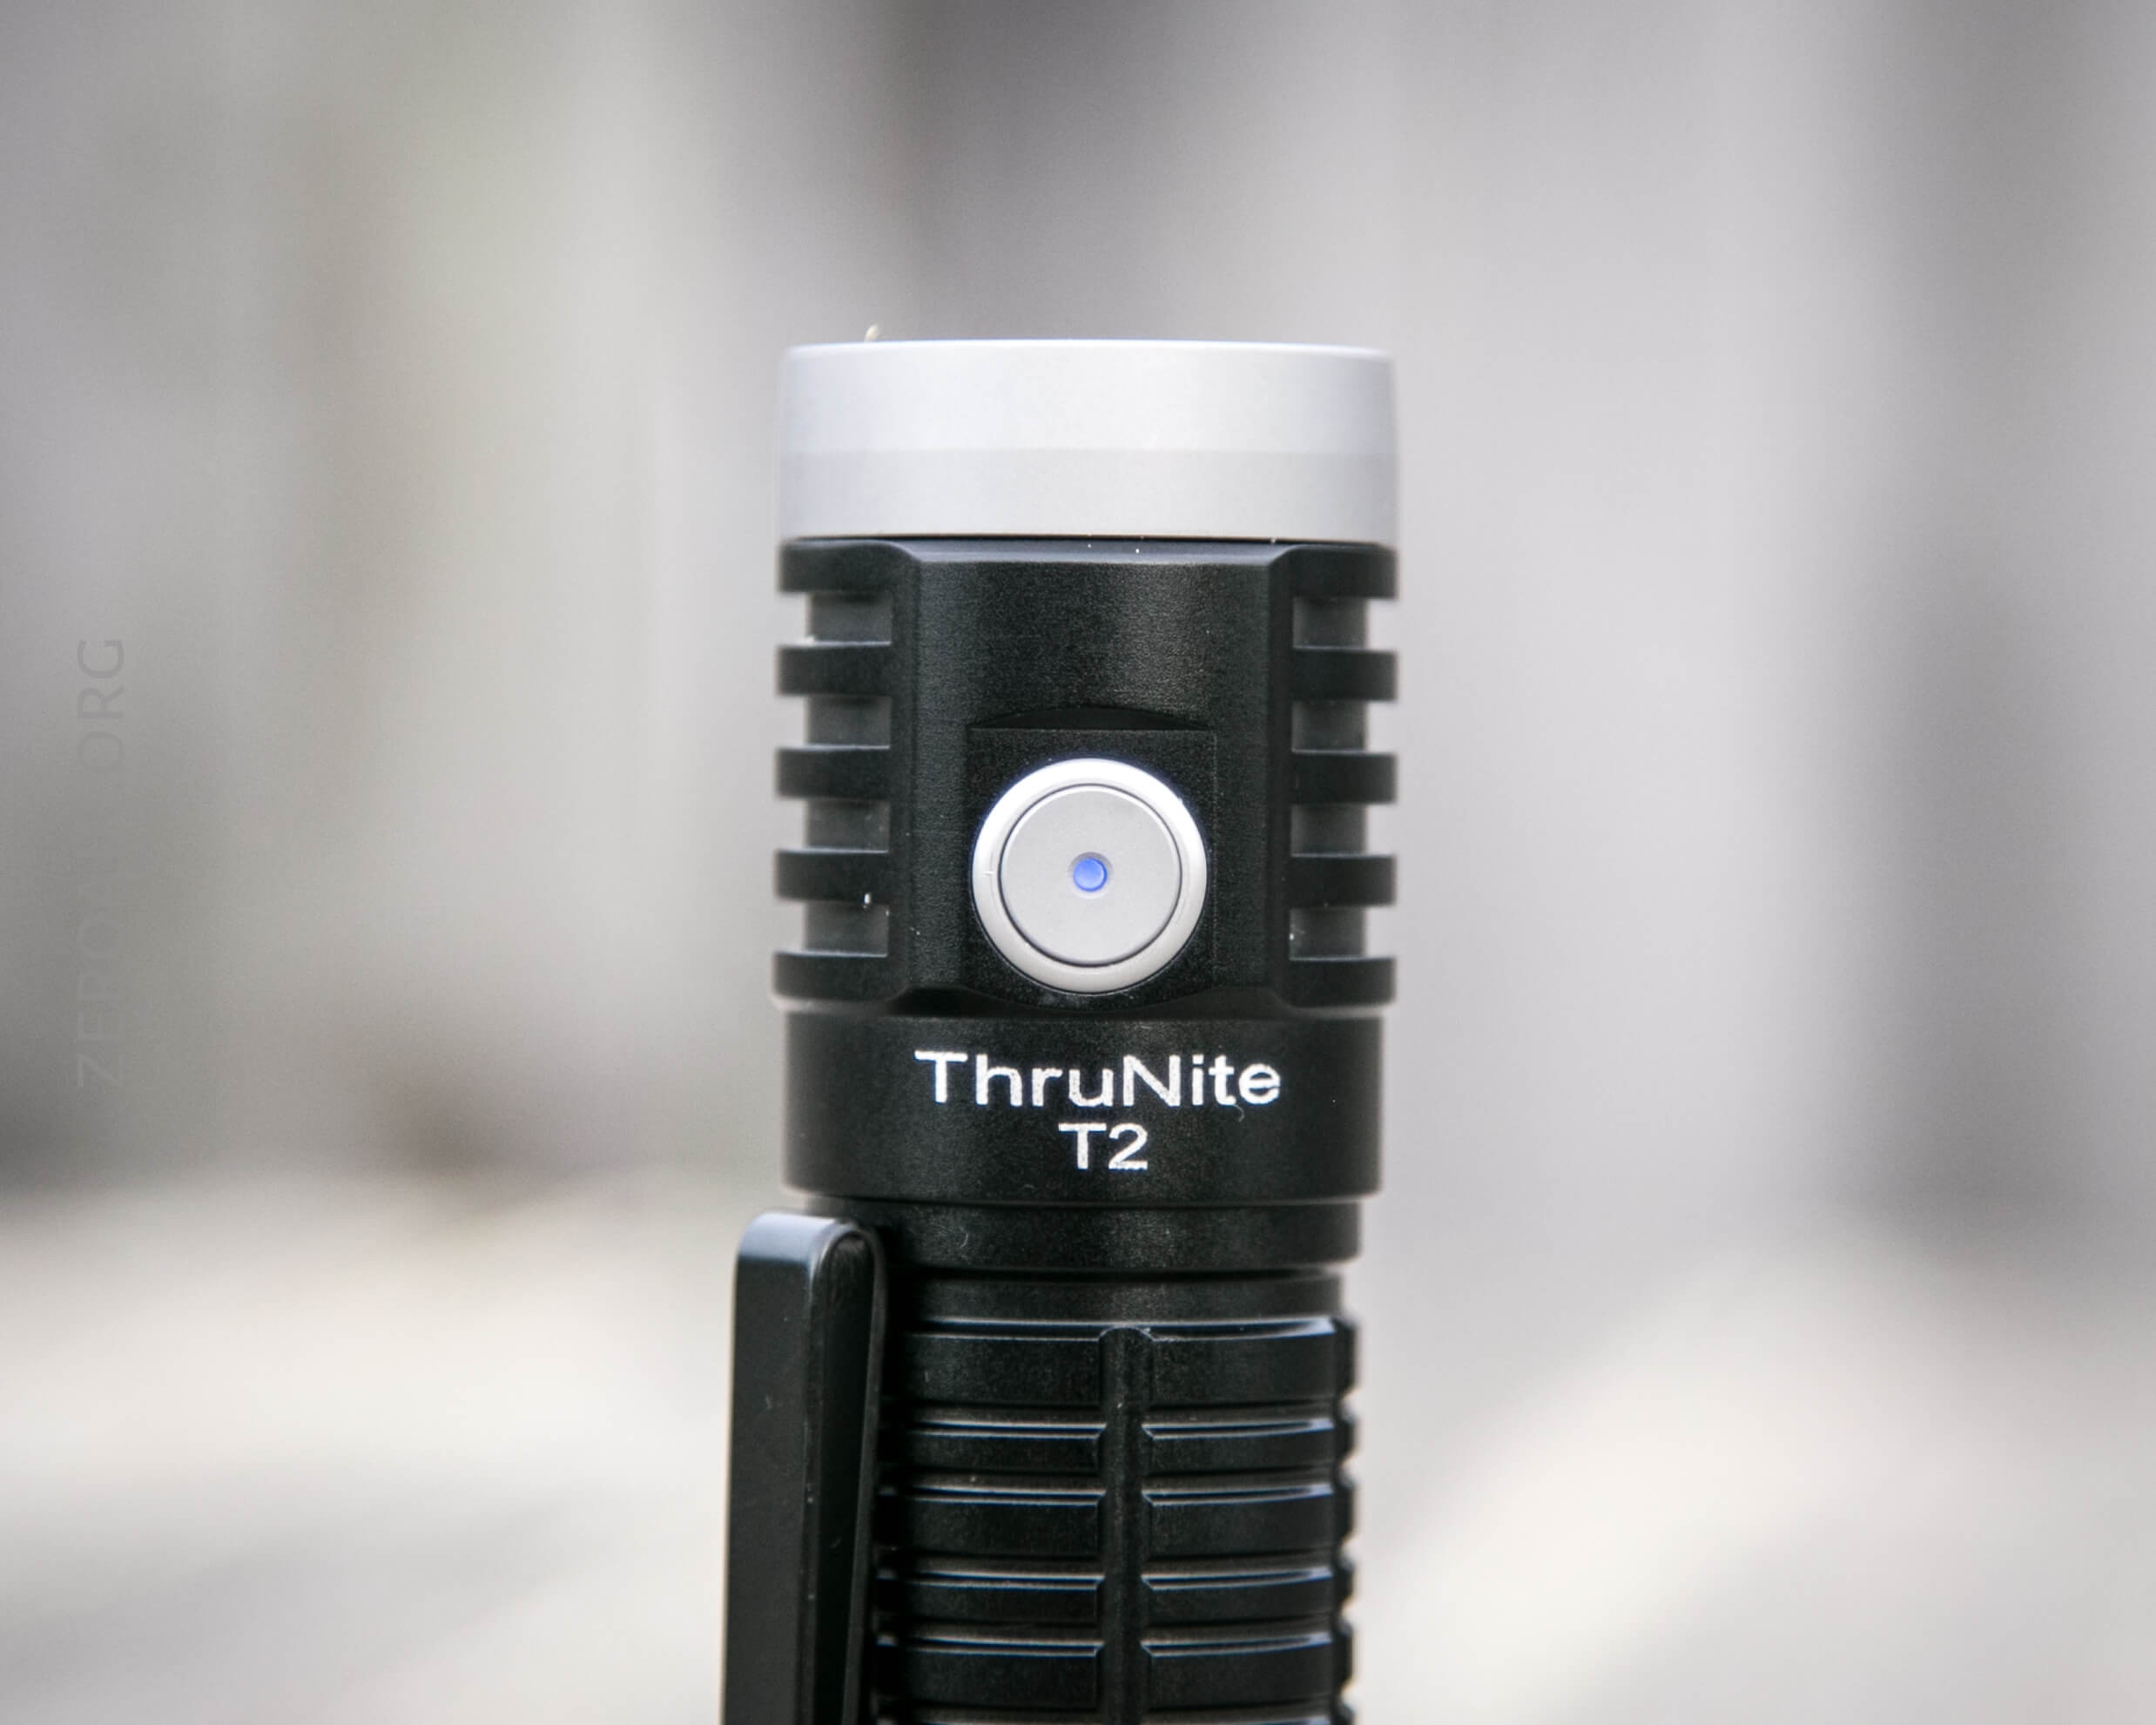 Thrunite T2 Flashlight